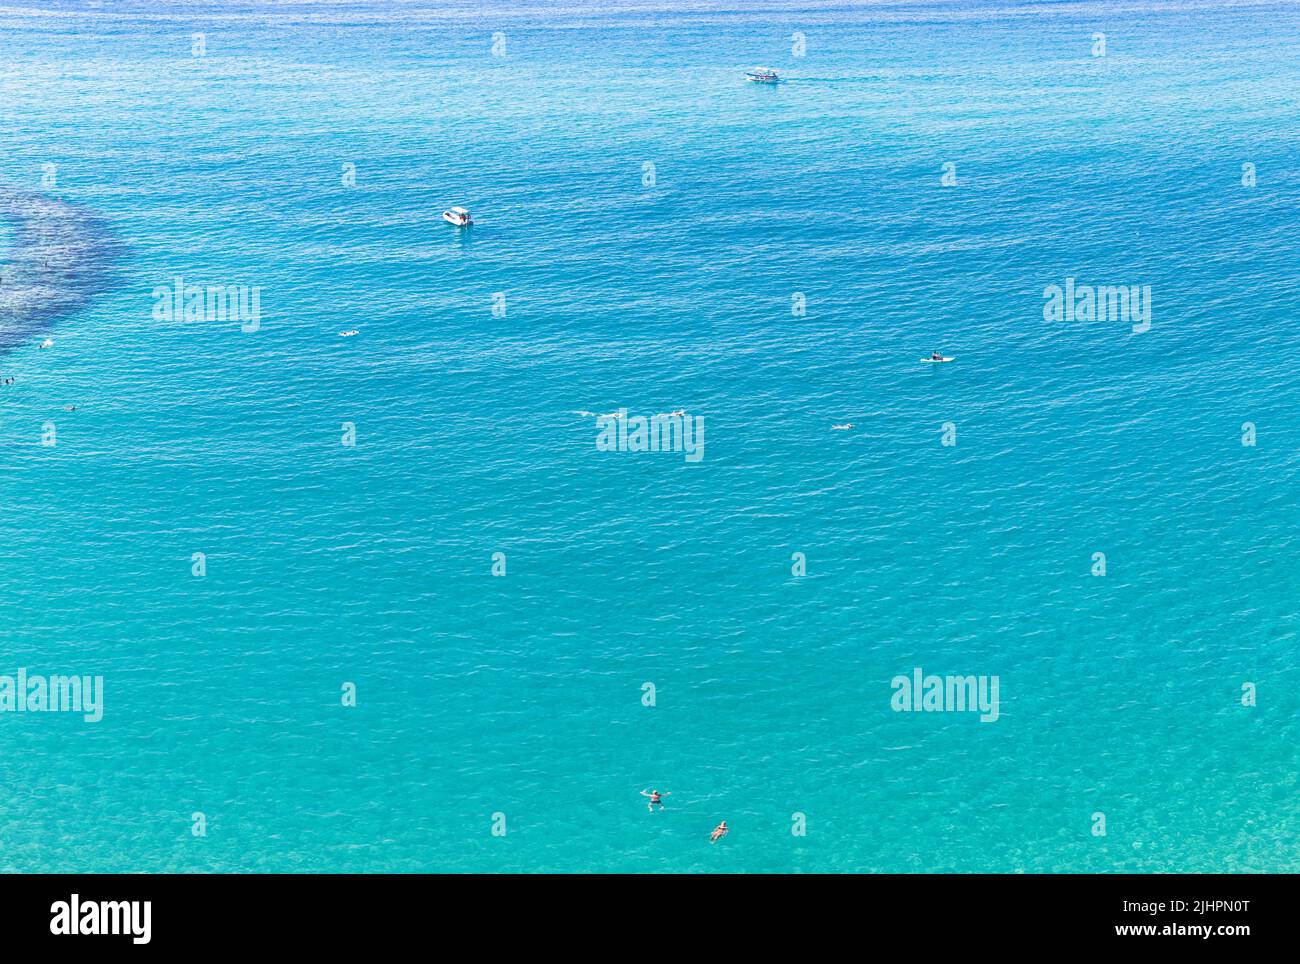 Summer activity in the turkis water of Mediterranean Sea Stock Photo